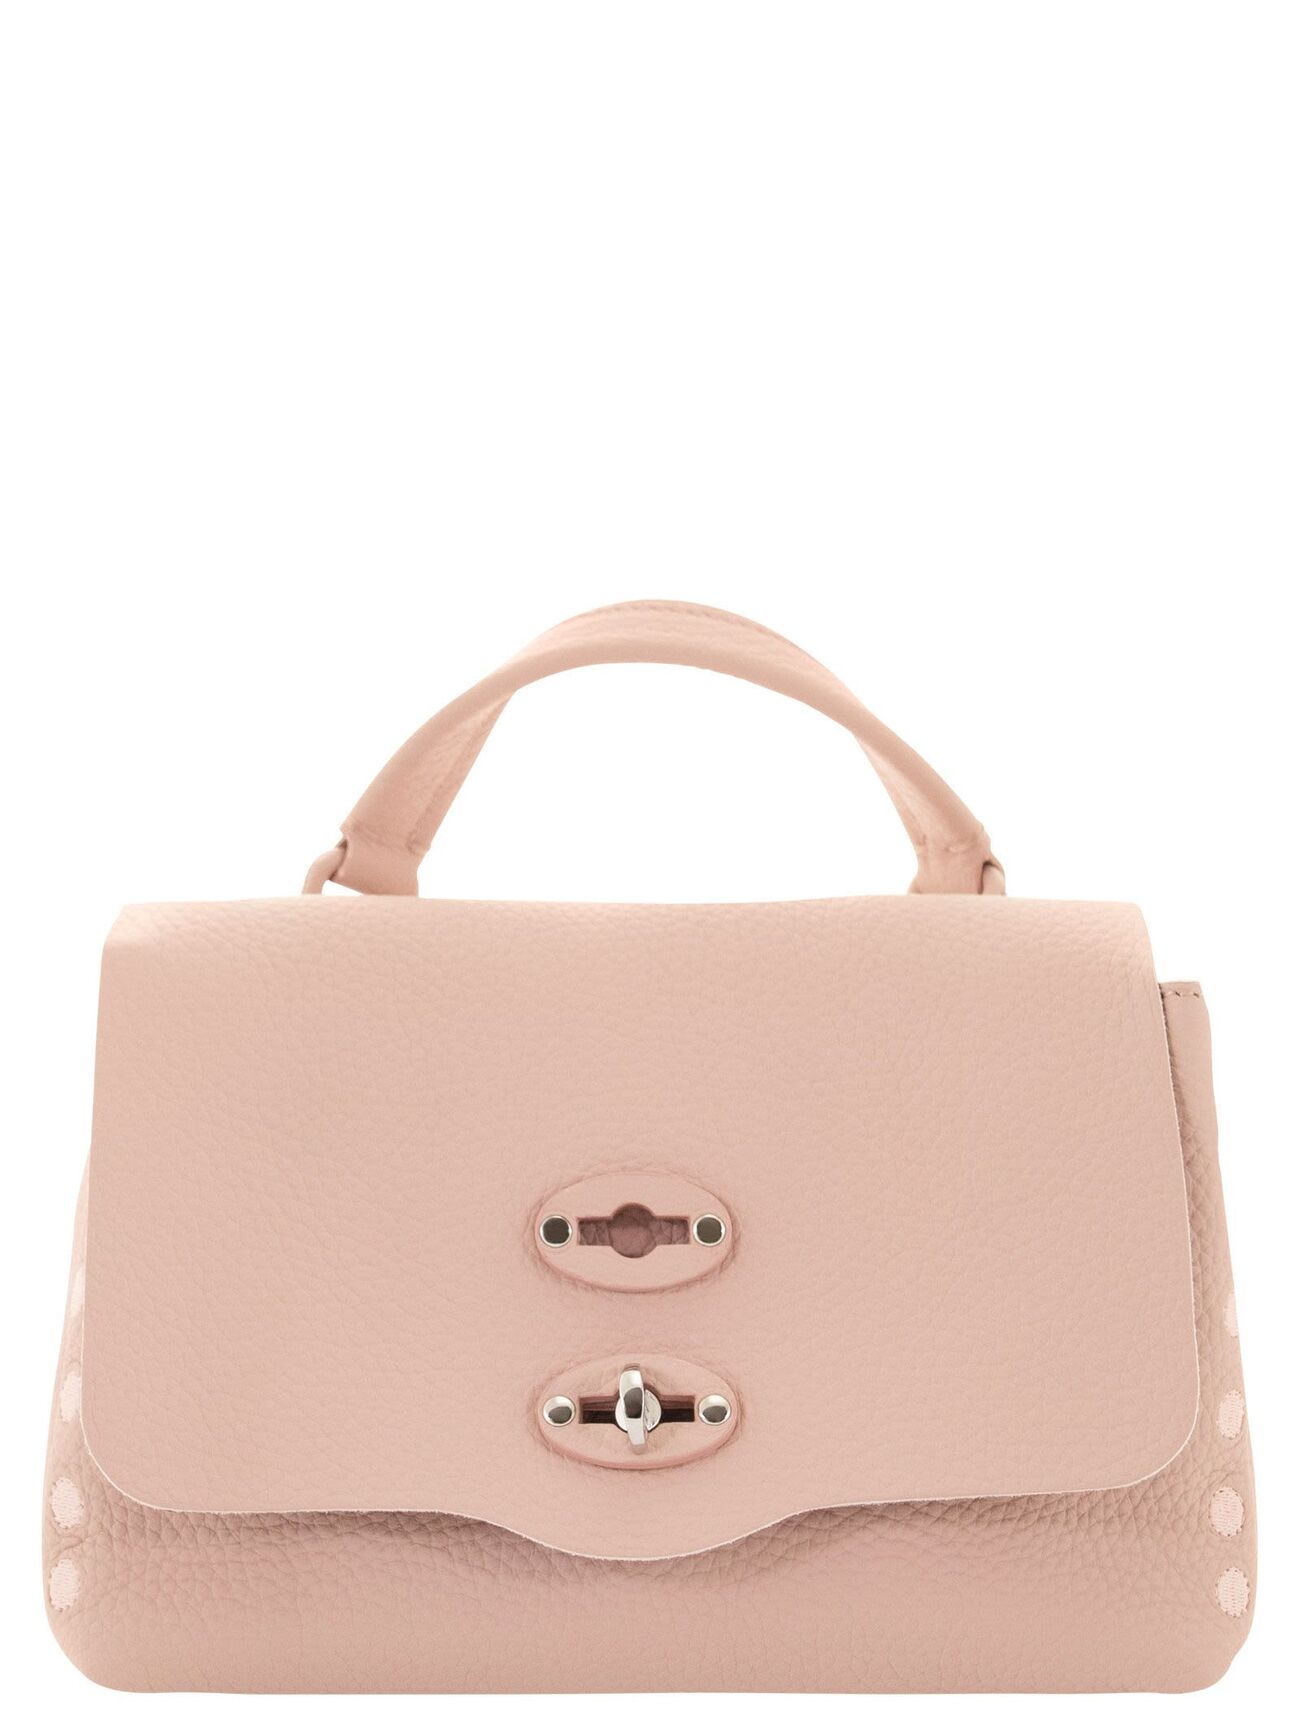 Zanellato Postina - Baby Pura Handbag in pink